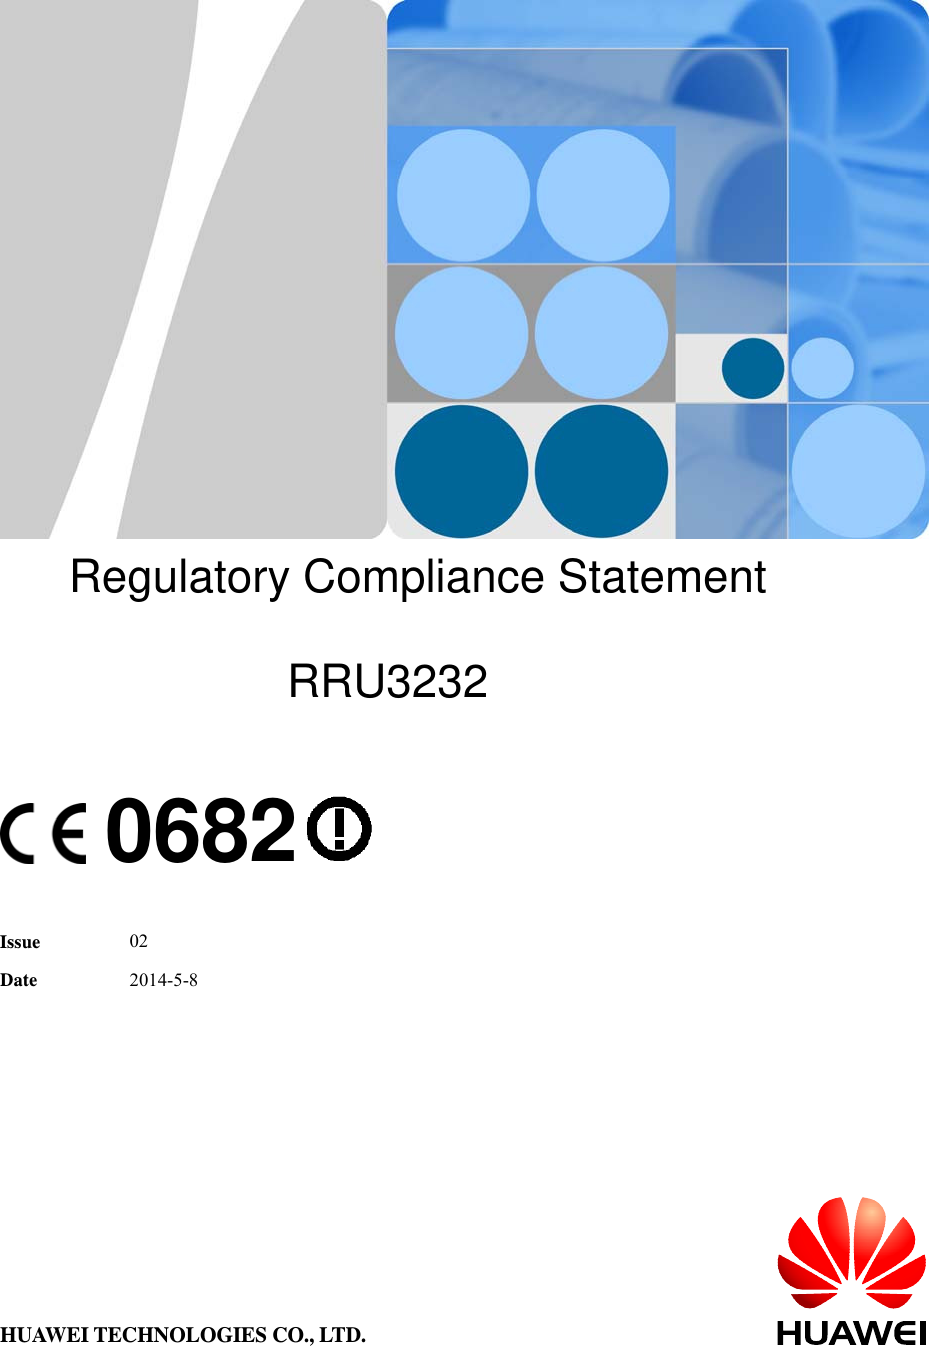             Regulatory Compliance Statement  RRU3232    0682   Issue 02 Date  2014-5-8 HUAWEI TECHNOLOGIES CO., LTD. 